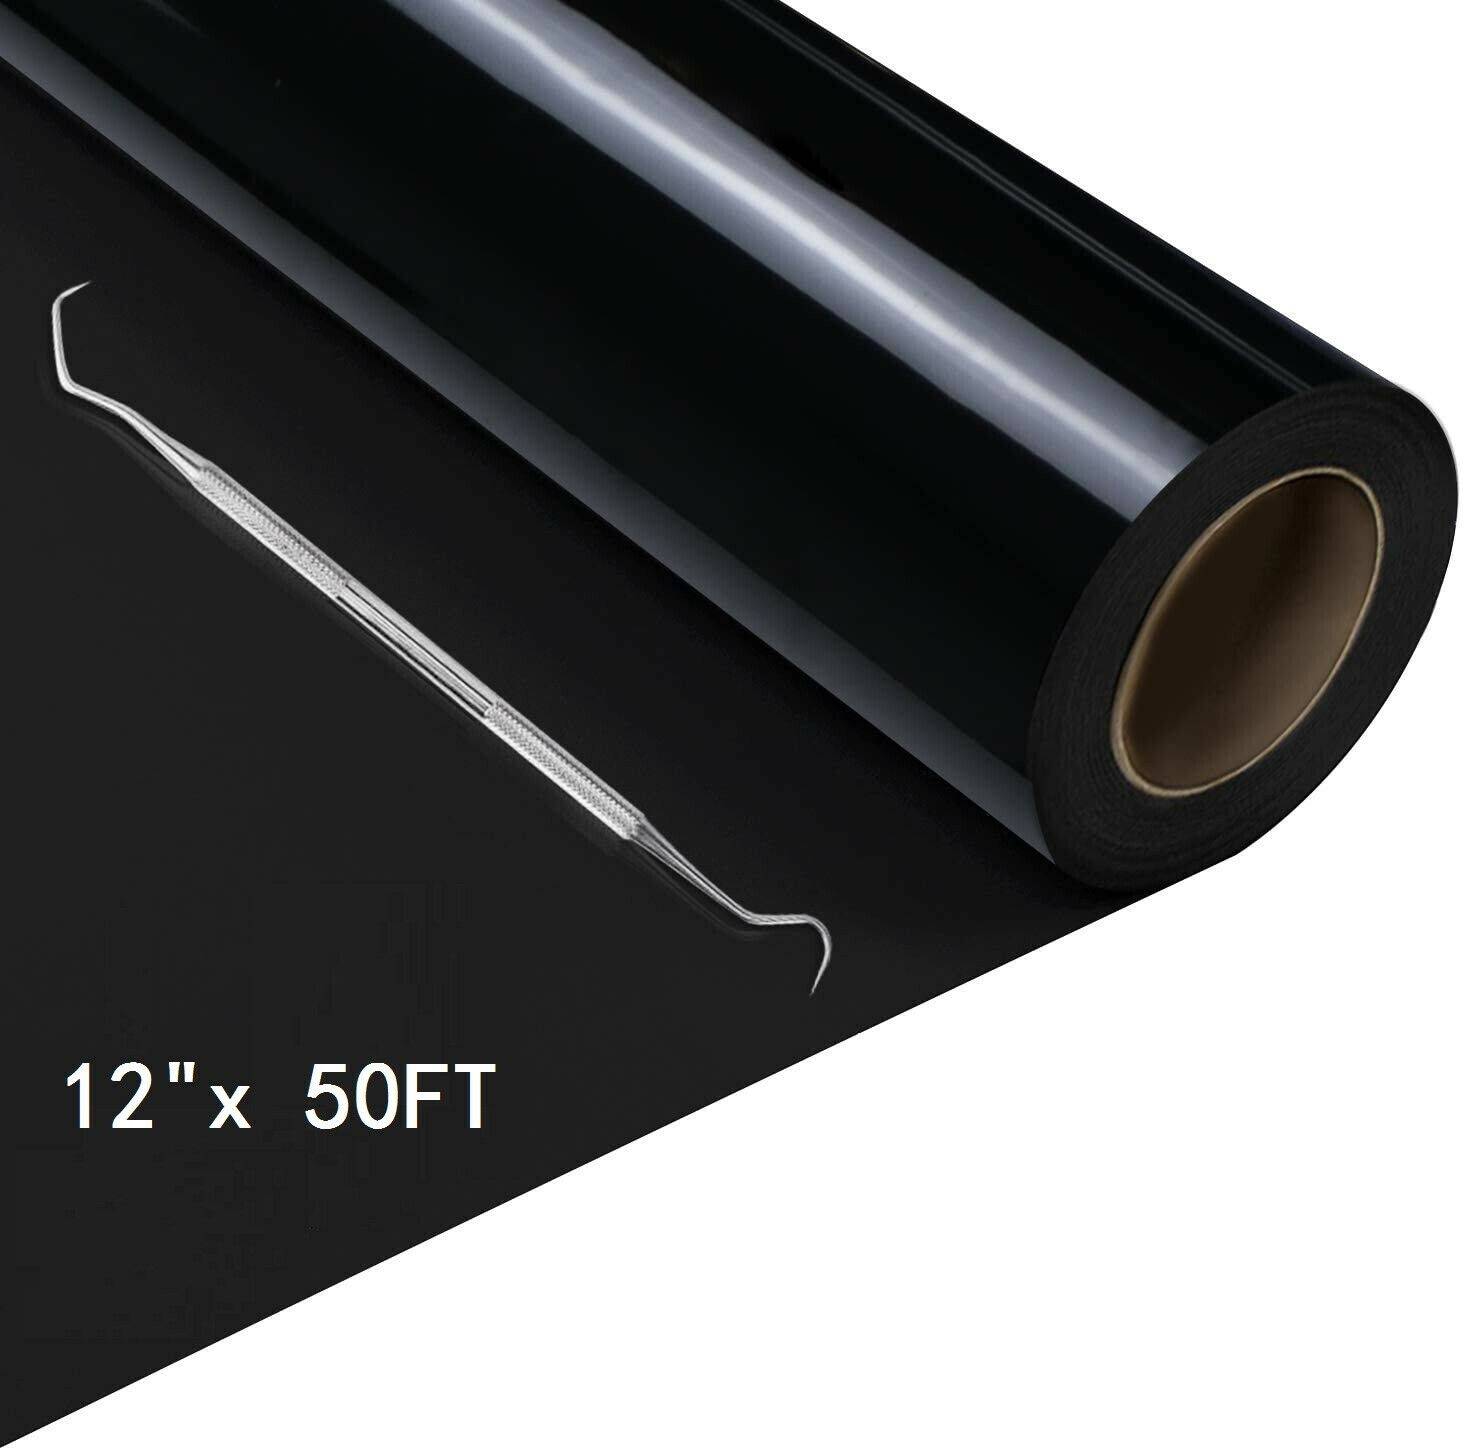 HTVRONT 12"X50ft/30x1500cm Heat Transfer Vinyl Roll for T-shirt Stickers Craft Iron on DIY HTV Film For Printing Clothing Home Decor cb5feb1b7314637725a2e7: Black|White